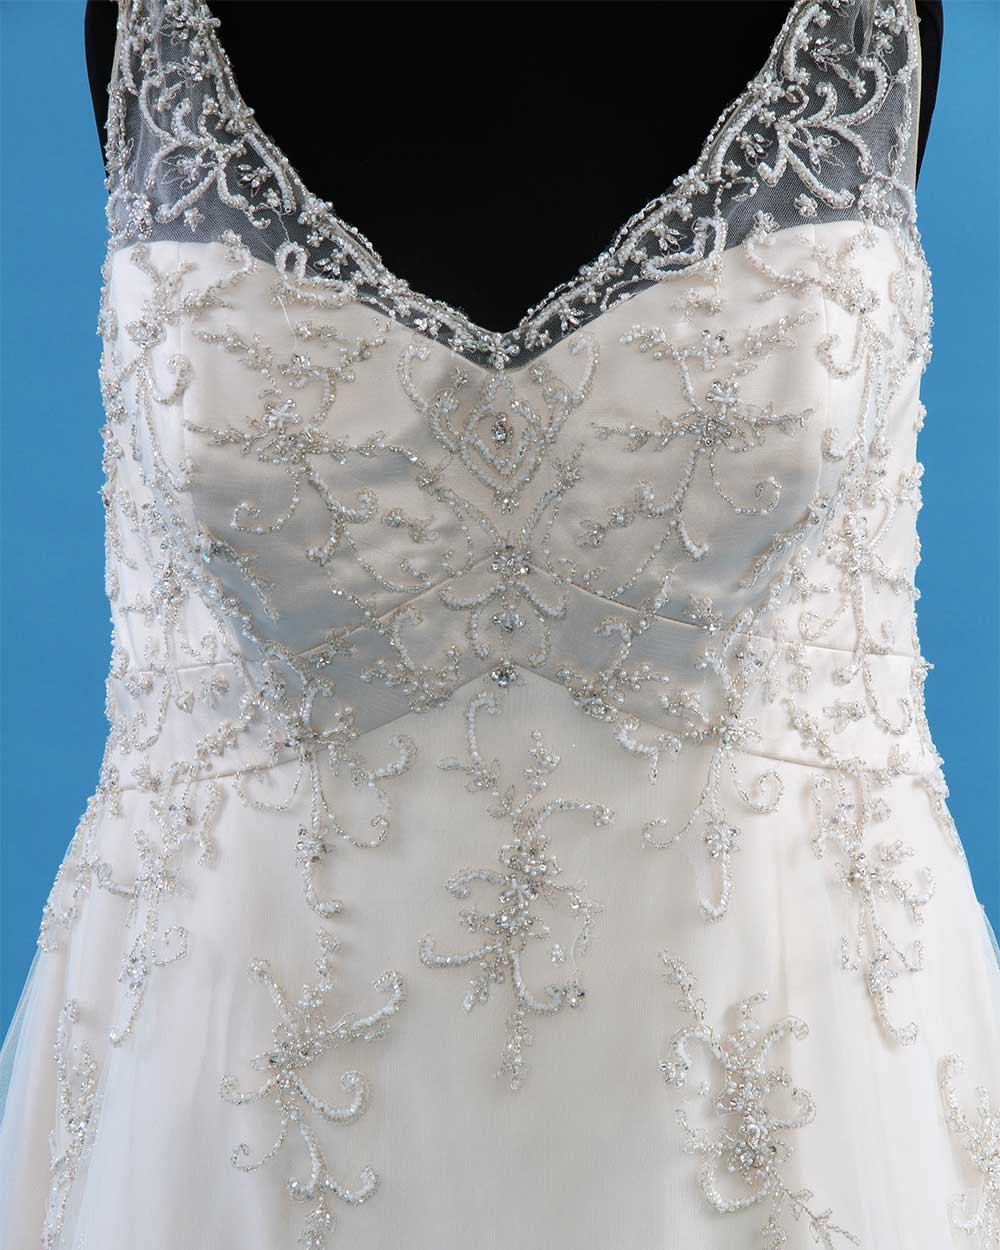 Sonsie By Veromia Champagne Wedding Dress Size 24